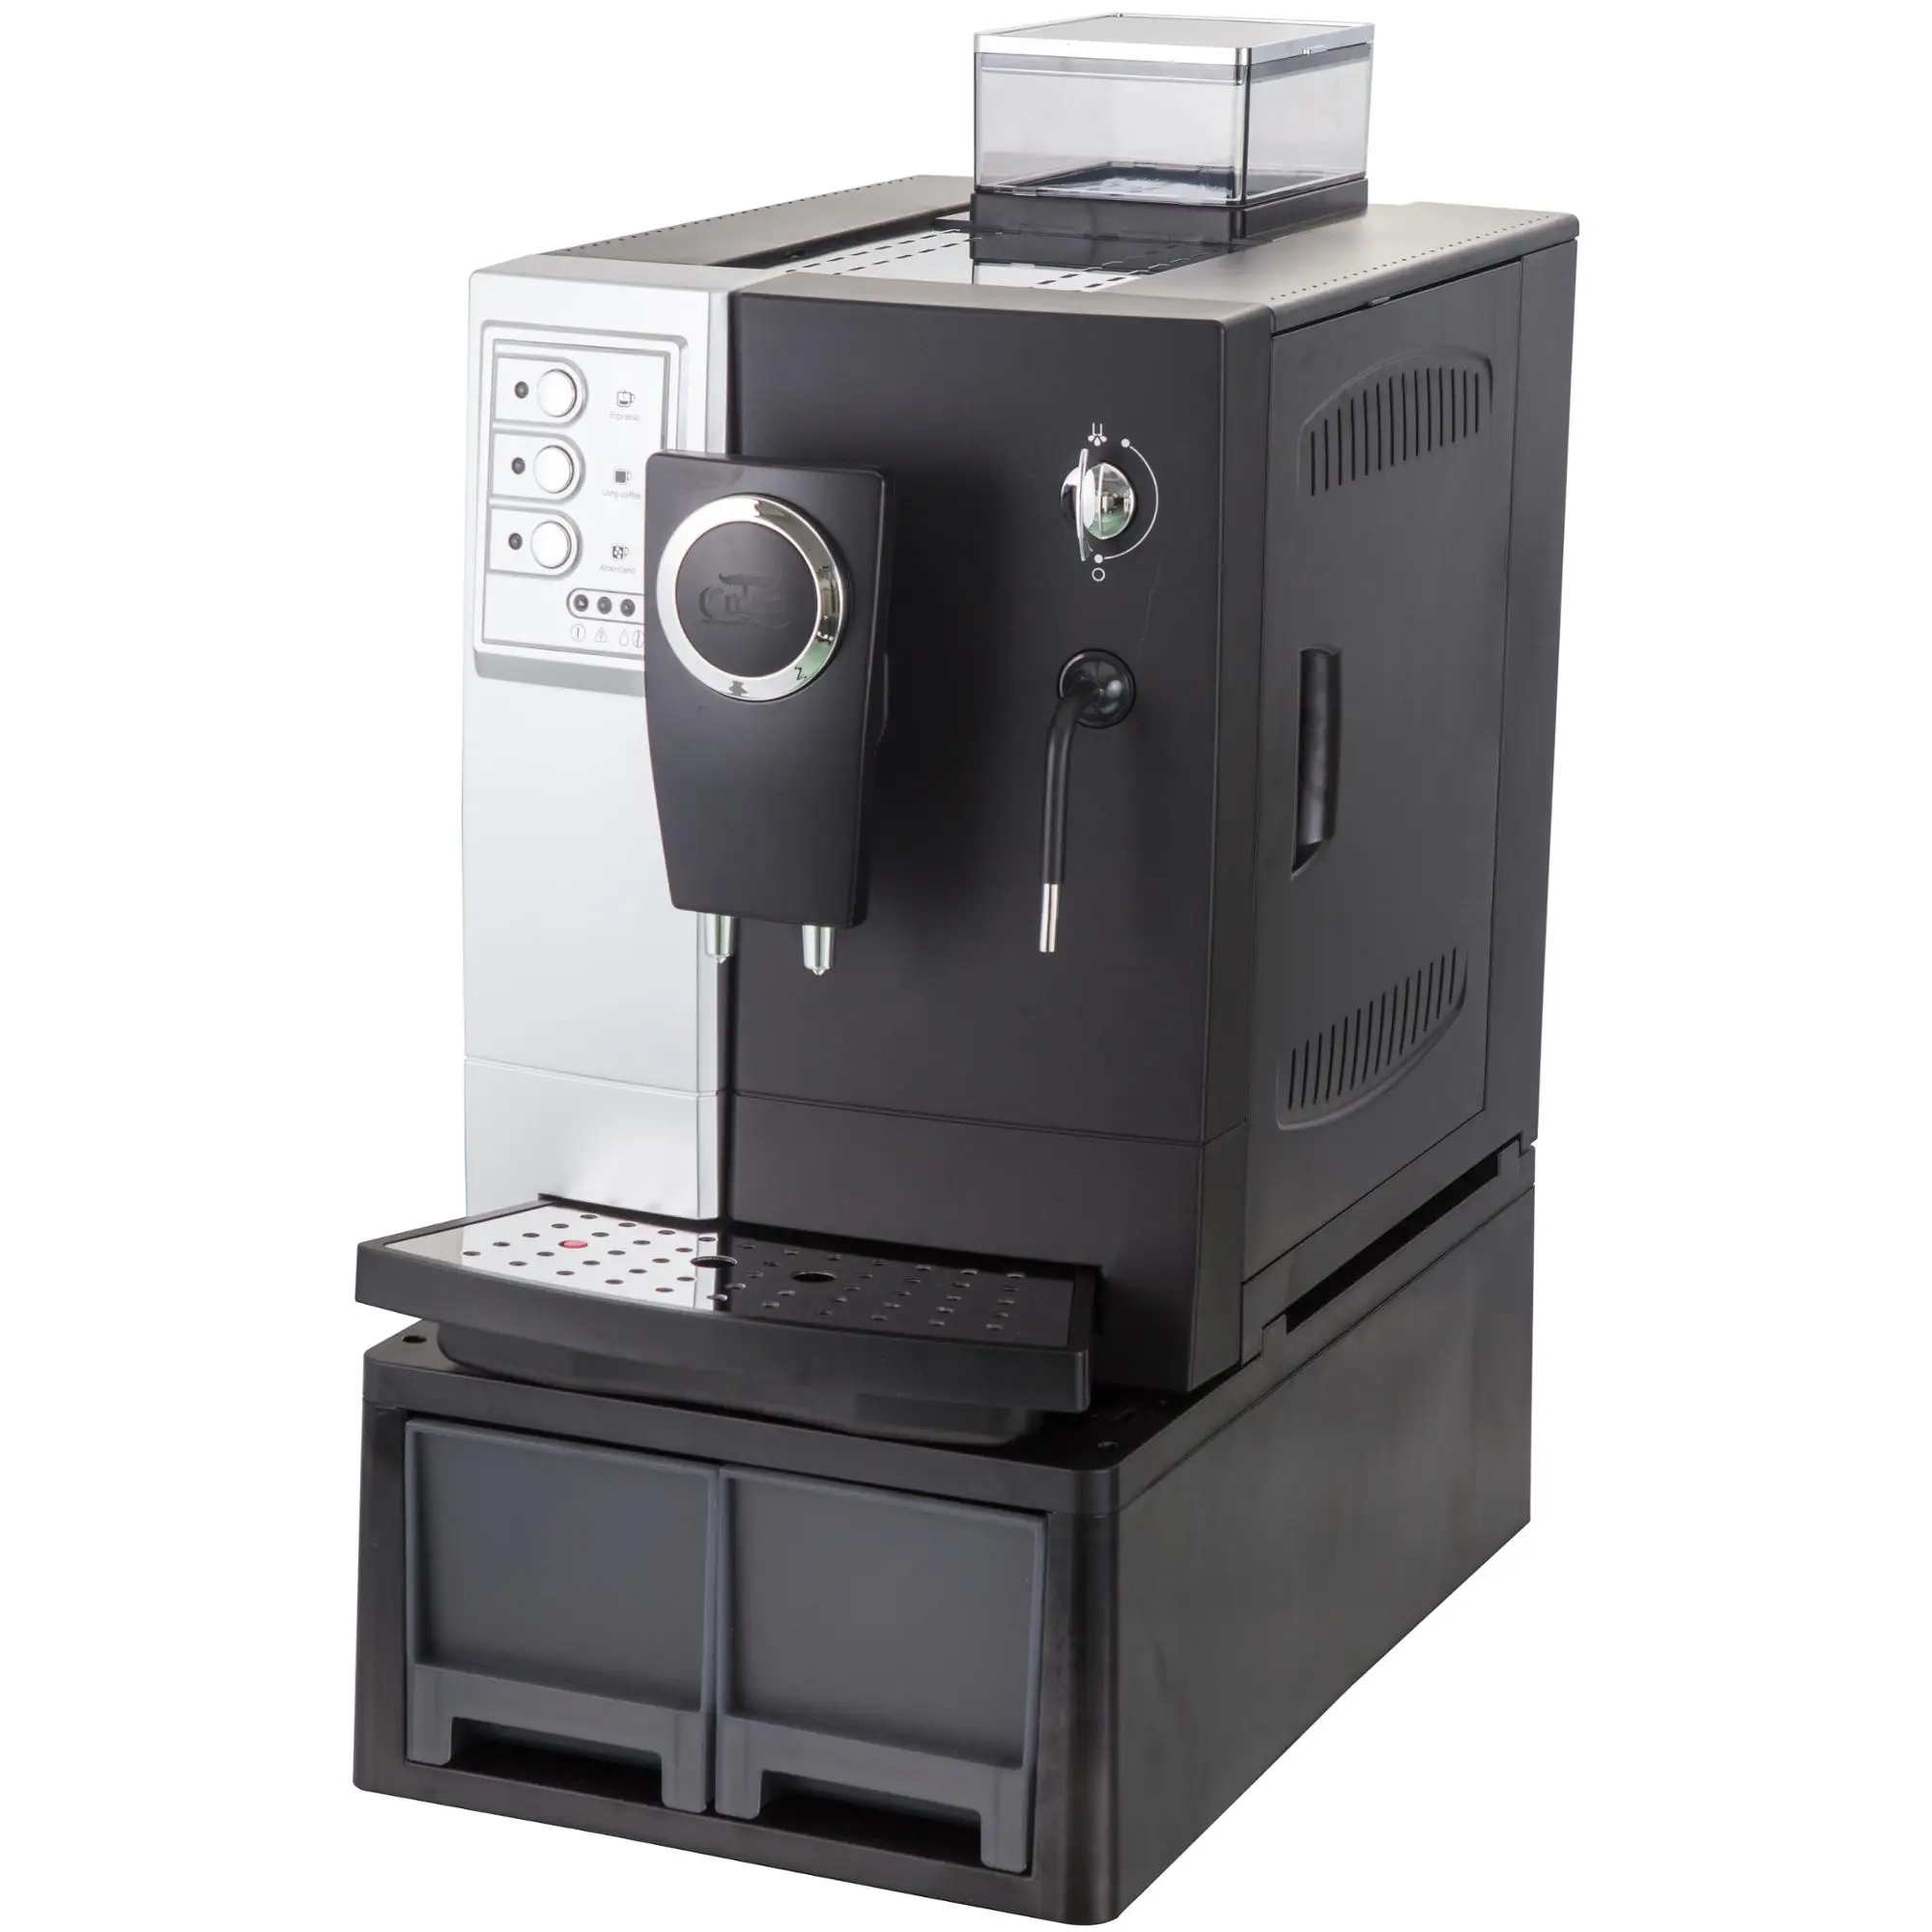 
Italy 19bar ULKA pump one touch cappuccino commercialfullyautomaticcoffee machine 